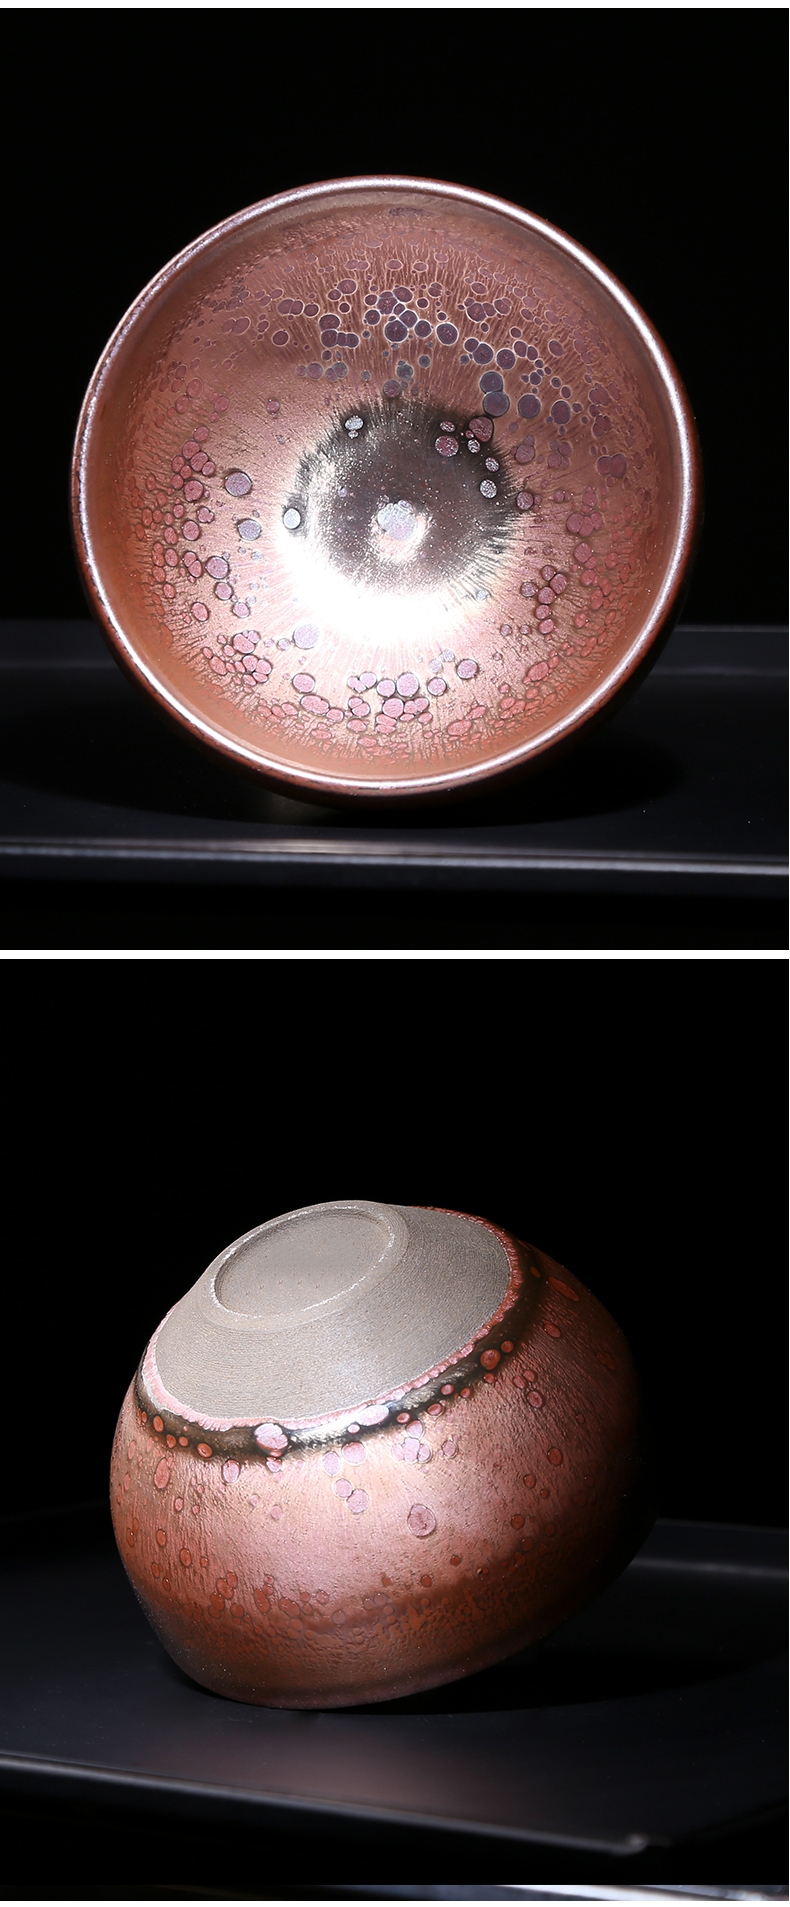 Choi question light tea master cup temmoku sample tea cup kung fu tea cup large bowl undressed ore ceramics